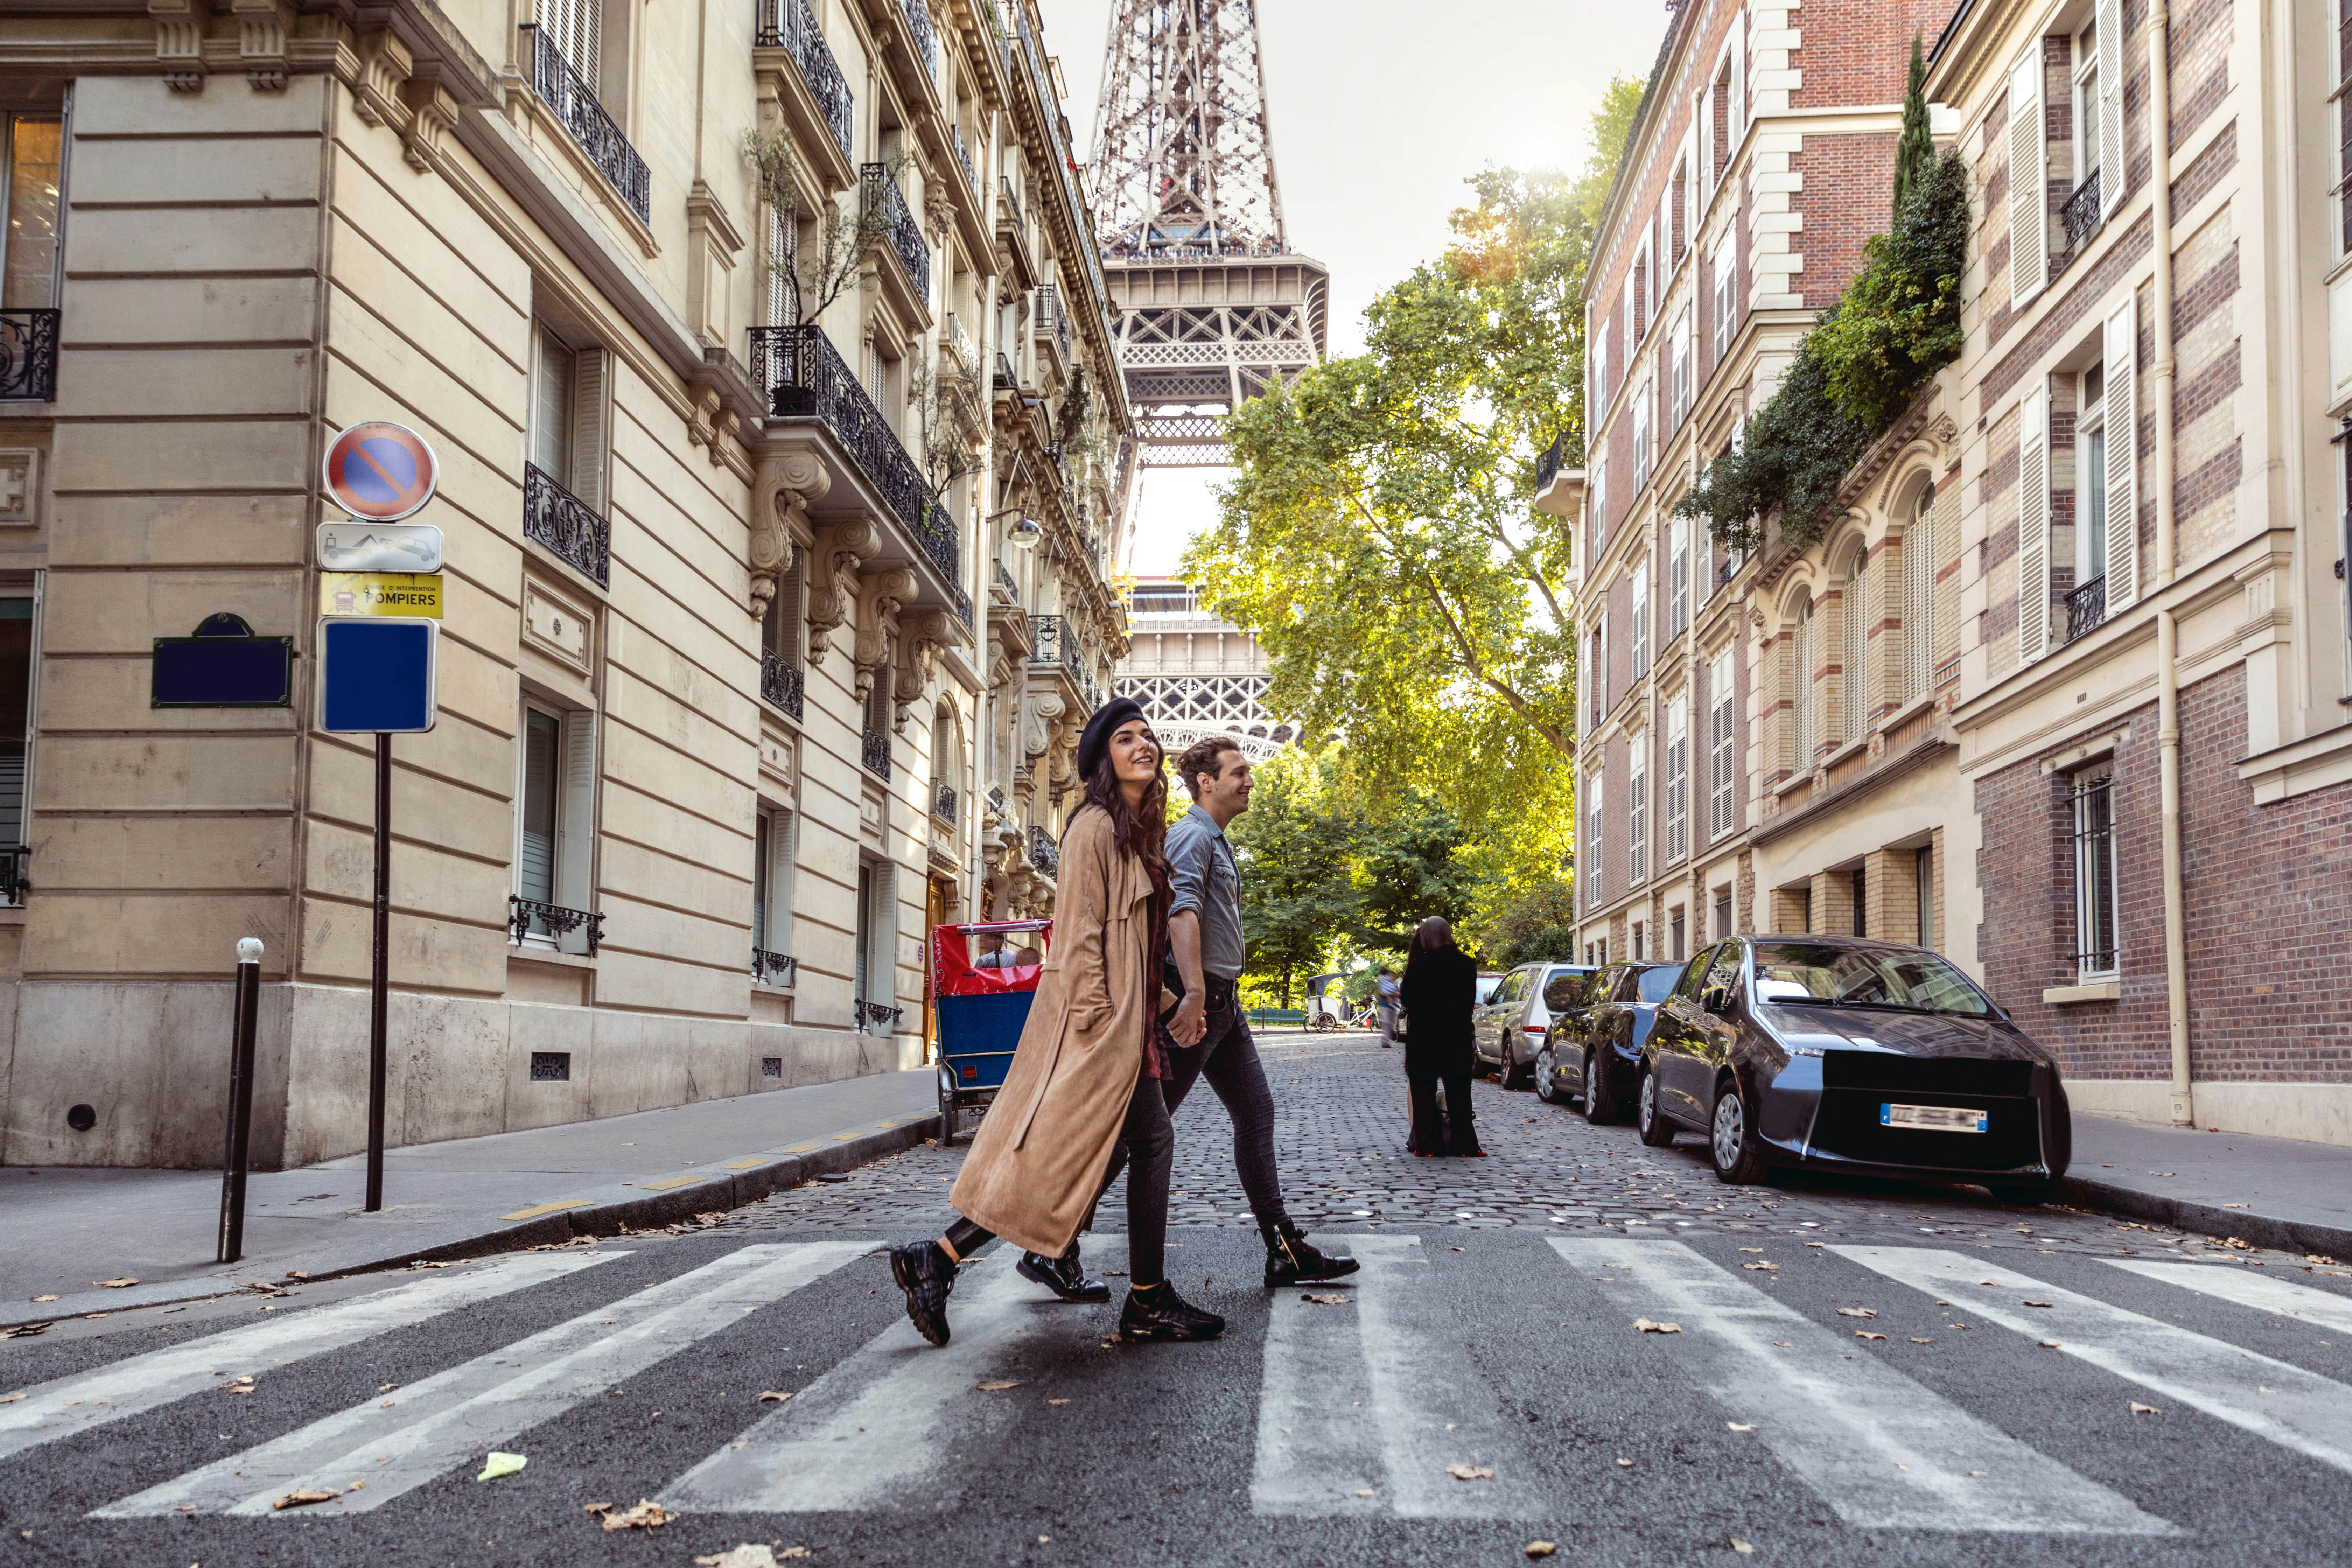 Walking around inside is like walking through the streets of Paris